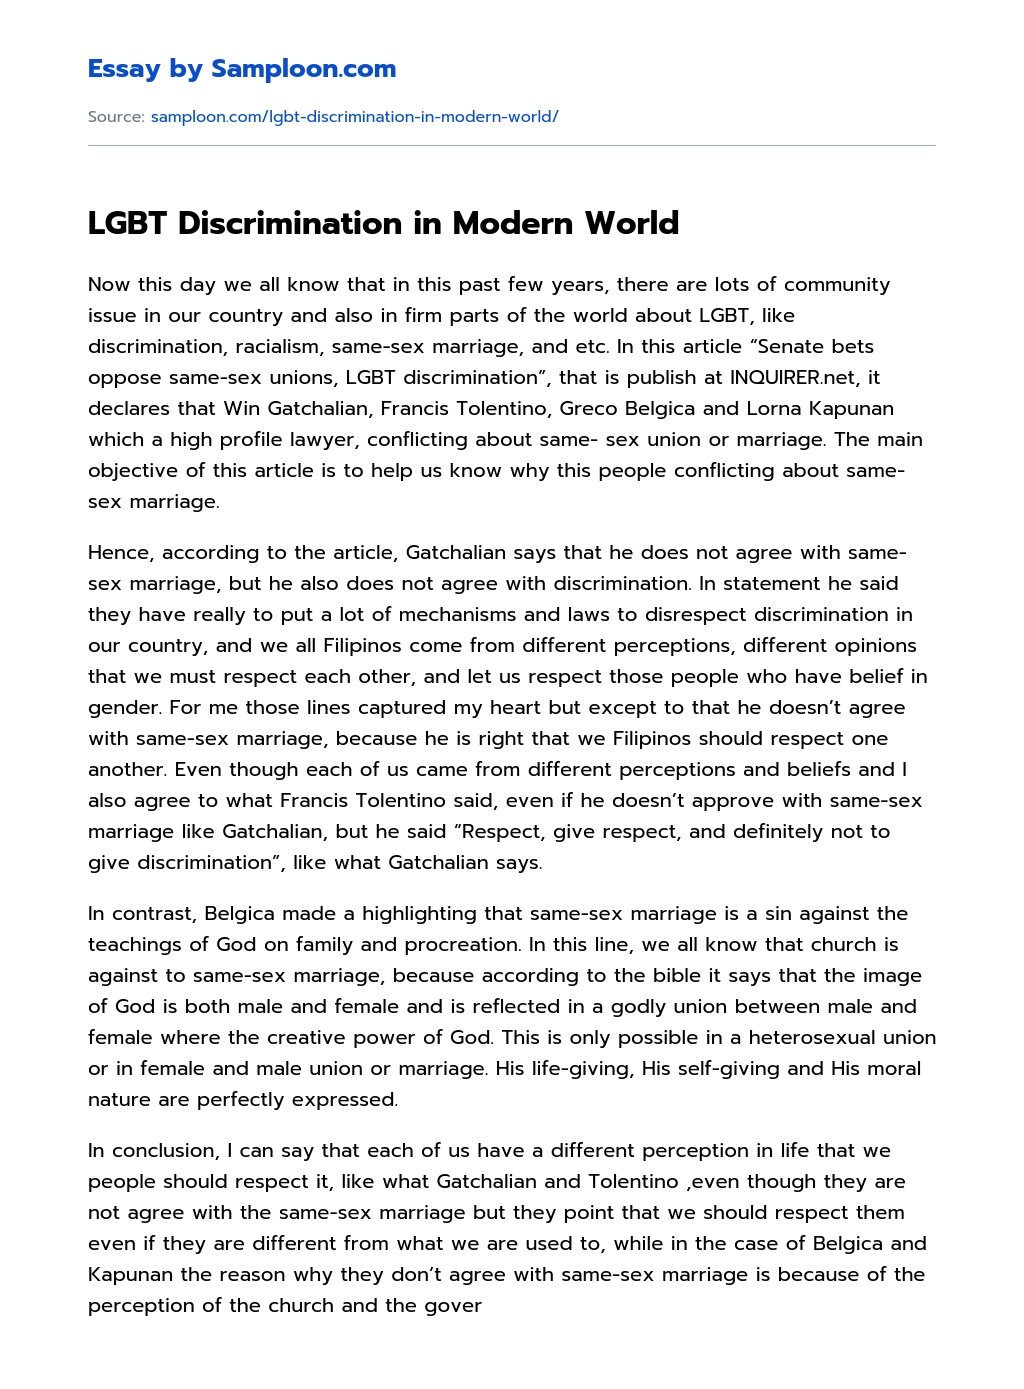 LGBT Discrimination in Modern World essay